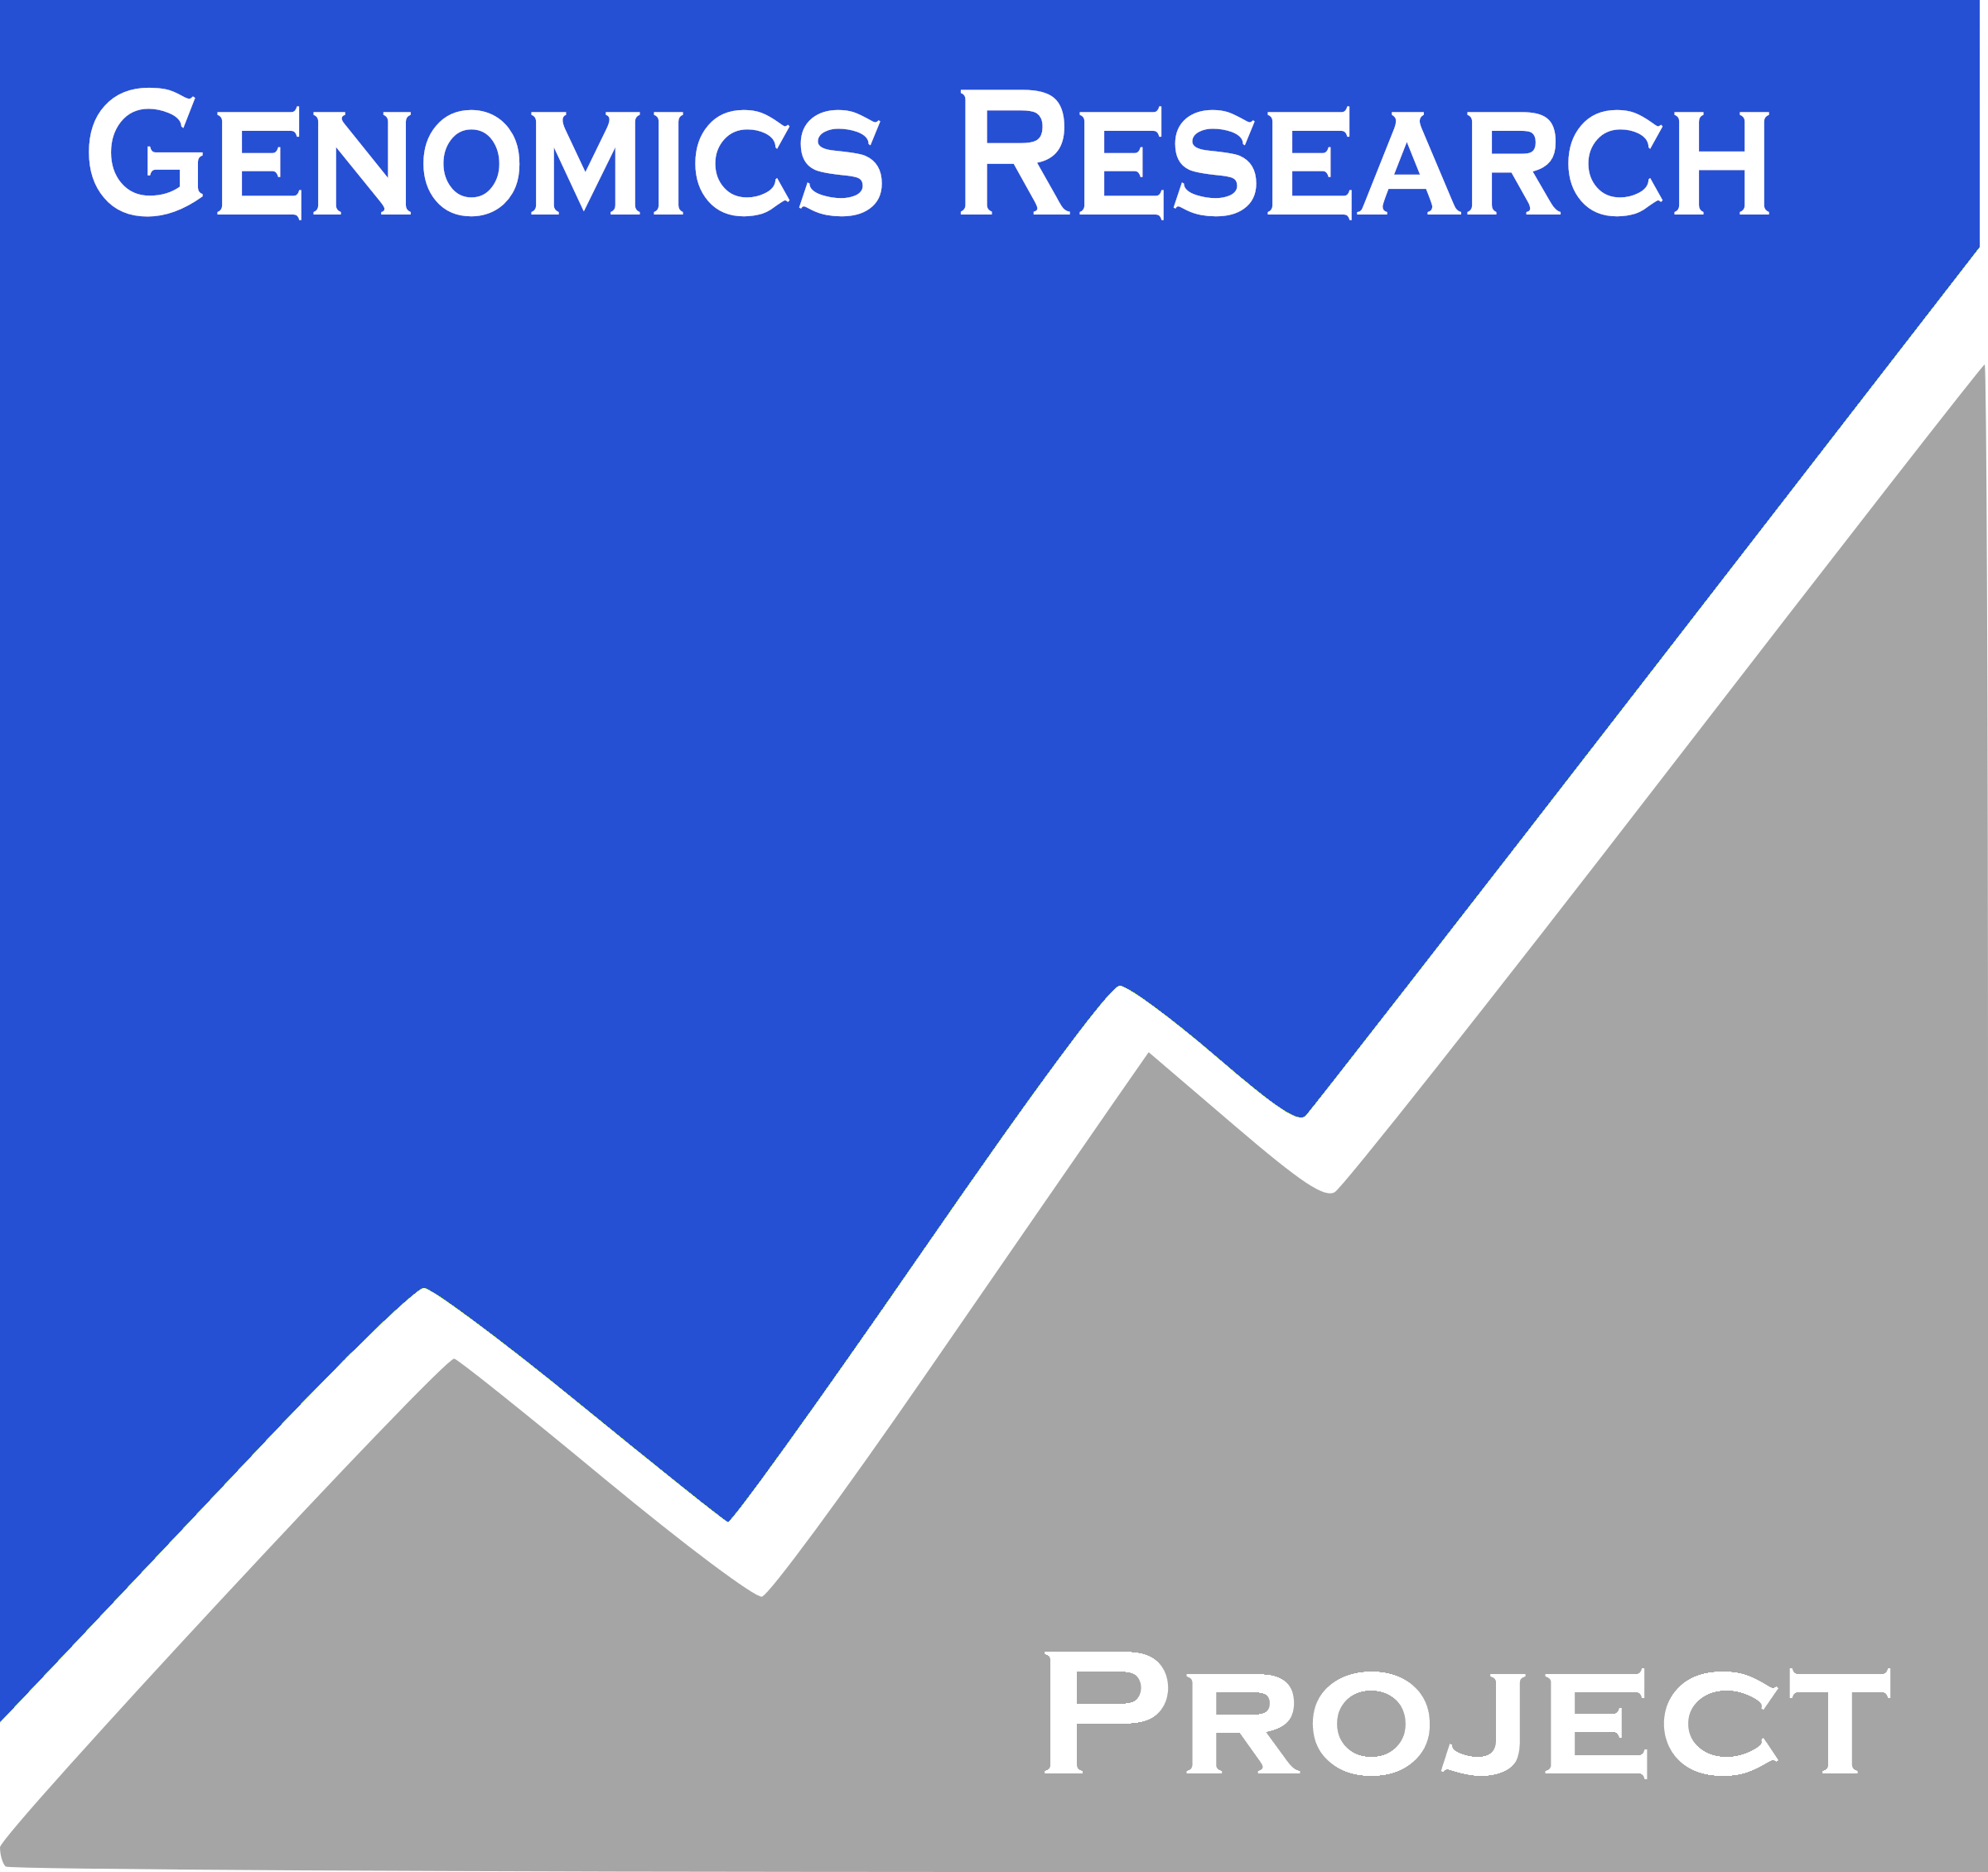 genomics research project logo